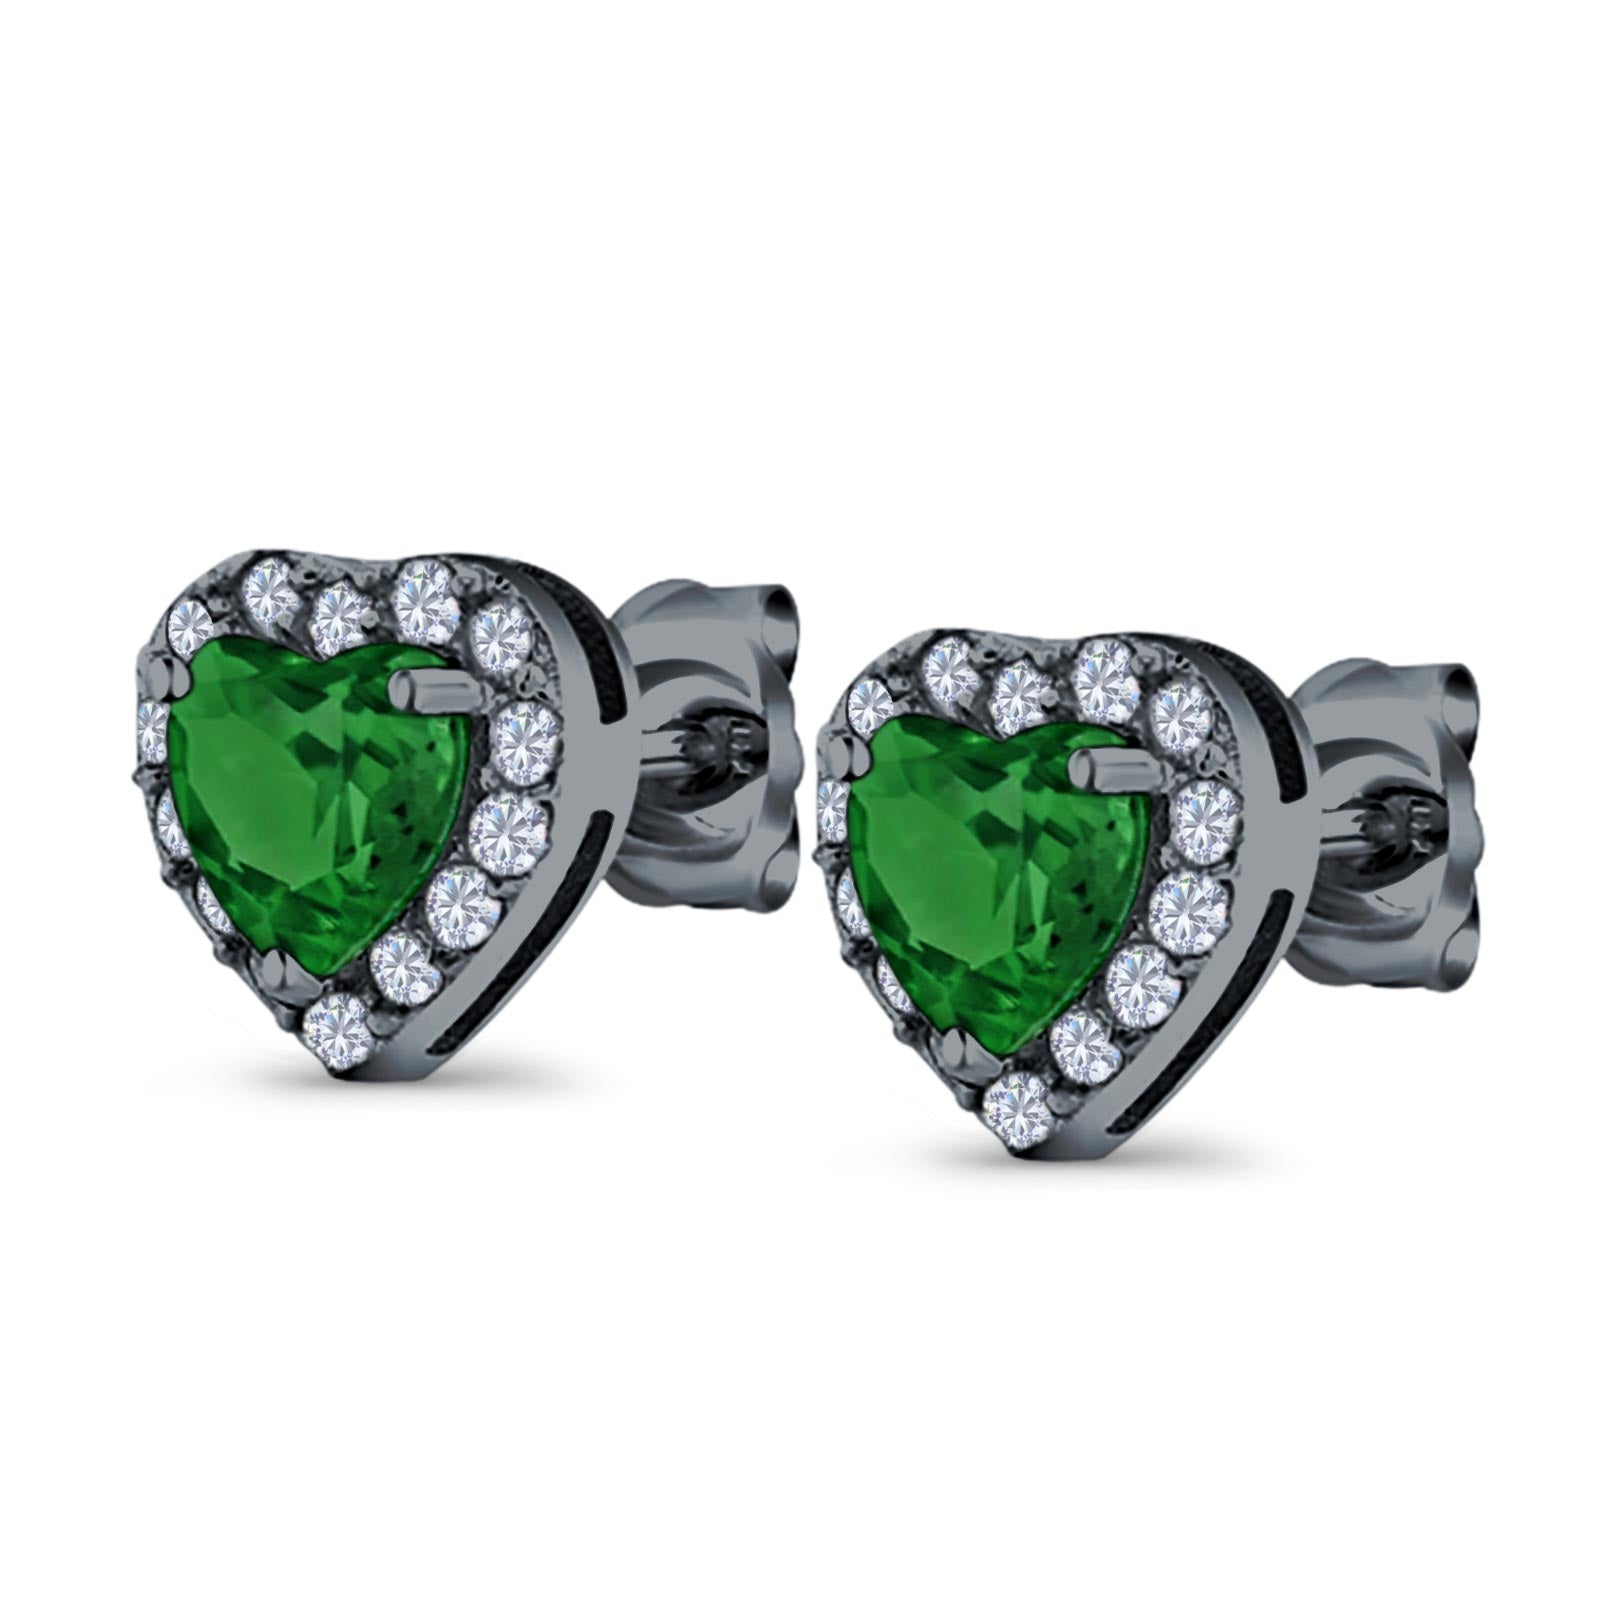 Heart shape Stud Earrings Wedding Simulated CZ 925 Sterling Silver (10mm)